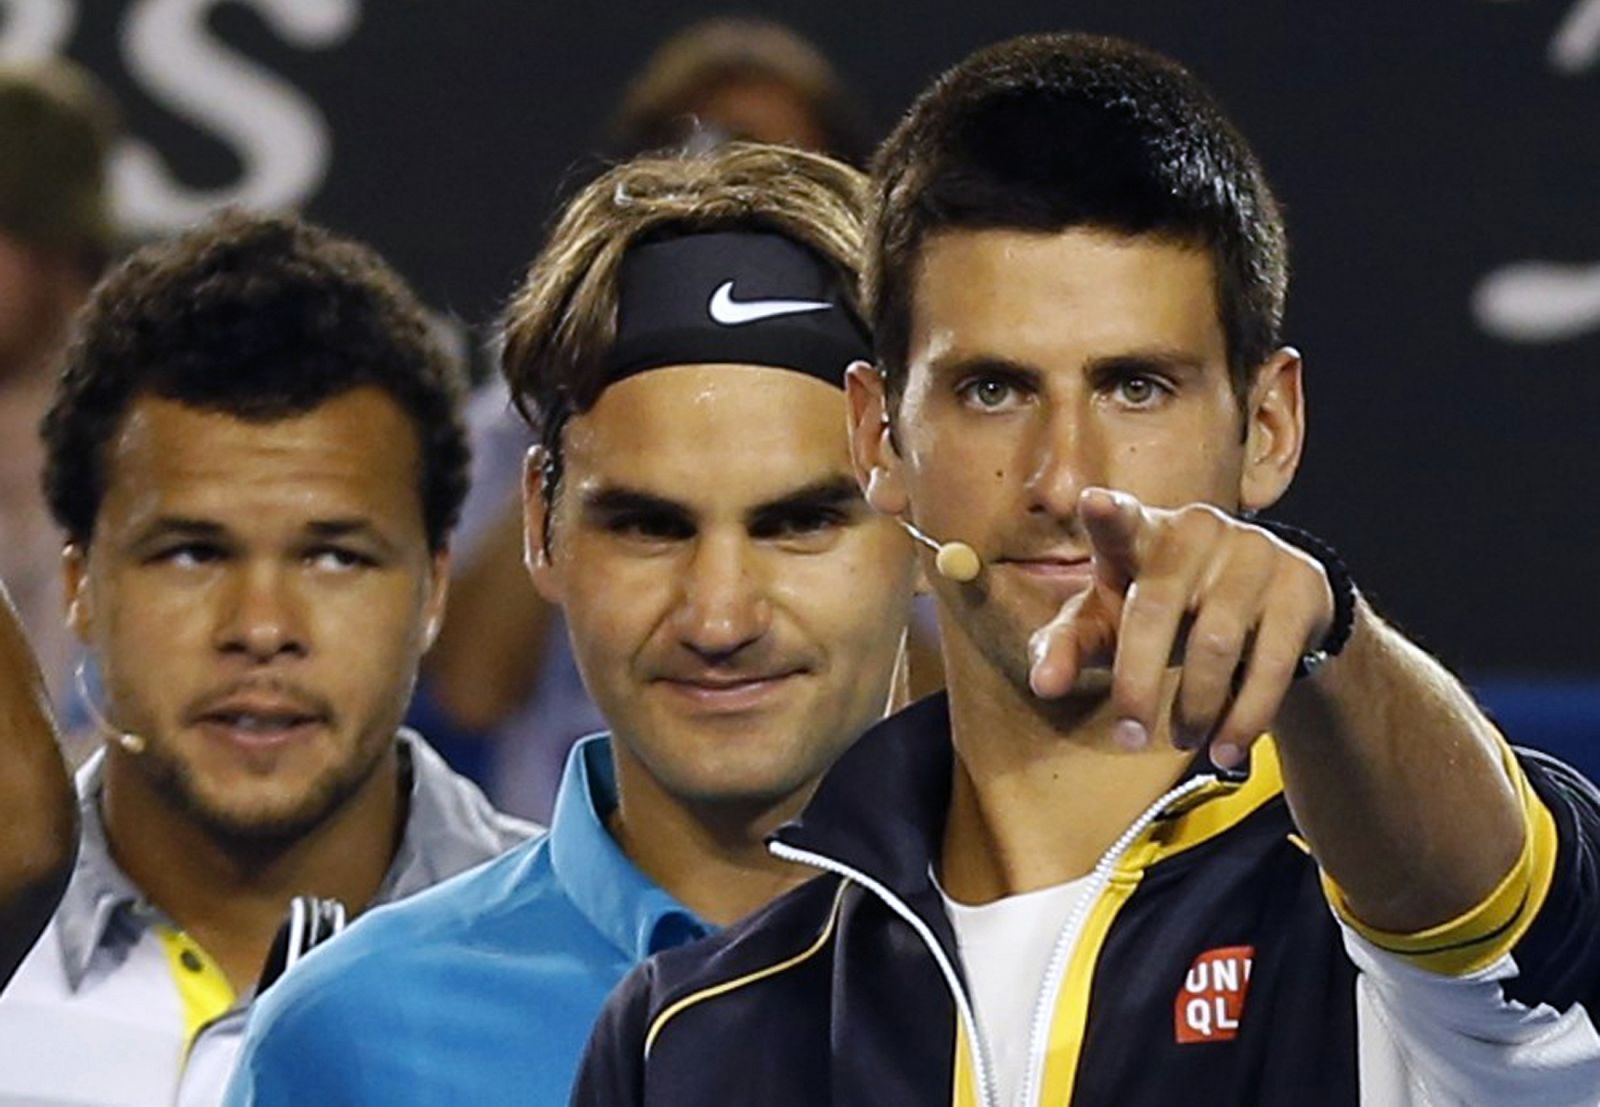 El serbio Novak Djokovic, en primer término, seguido de Roger Federer y Jo-Wilfred Tsonga en Melbourne